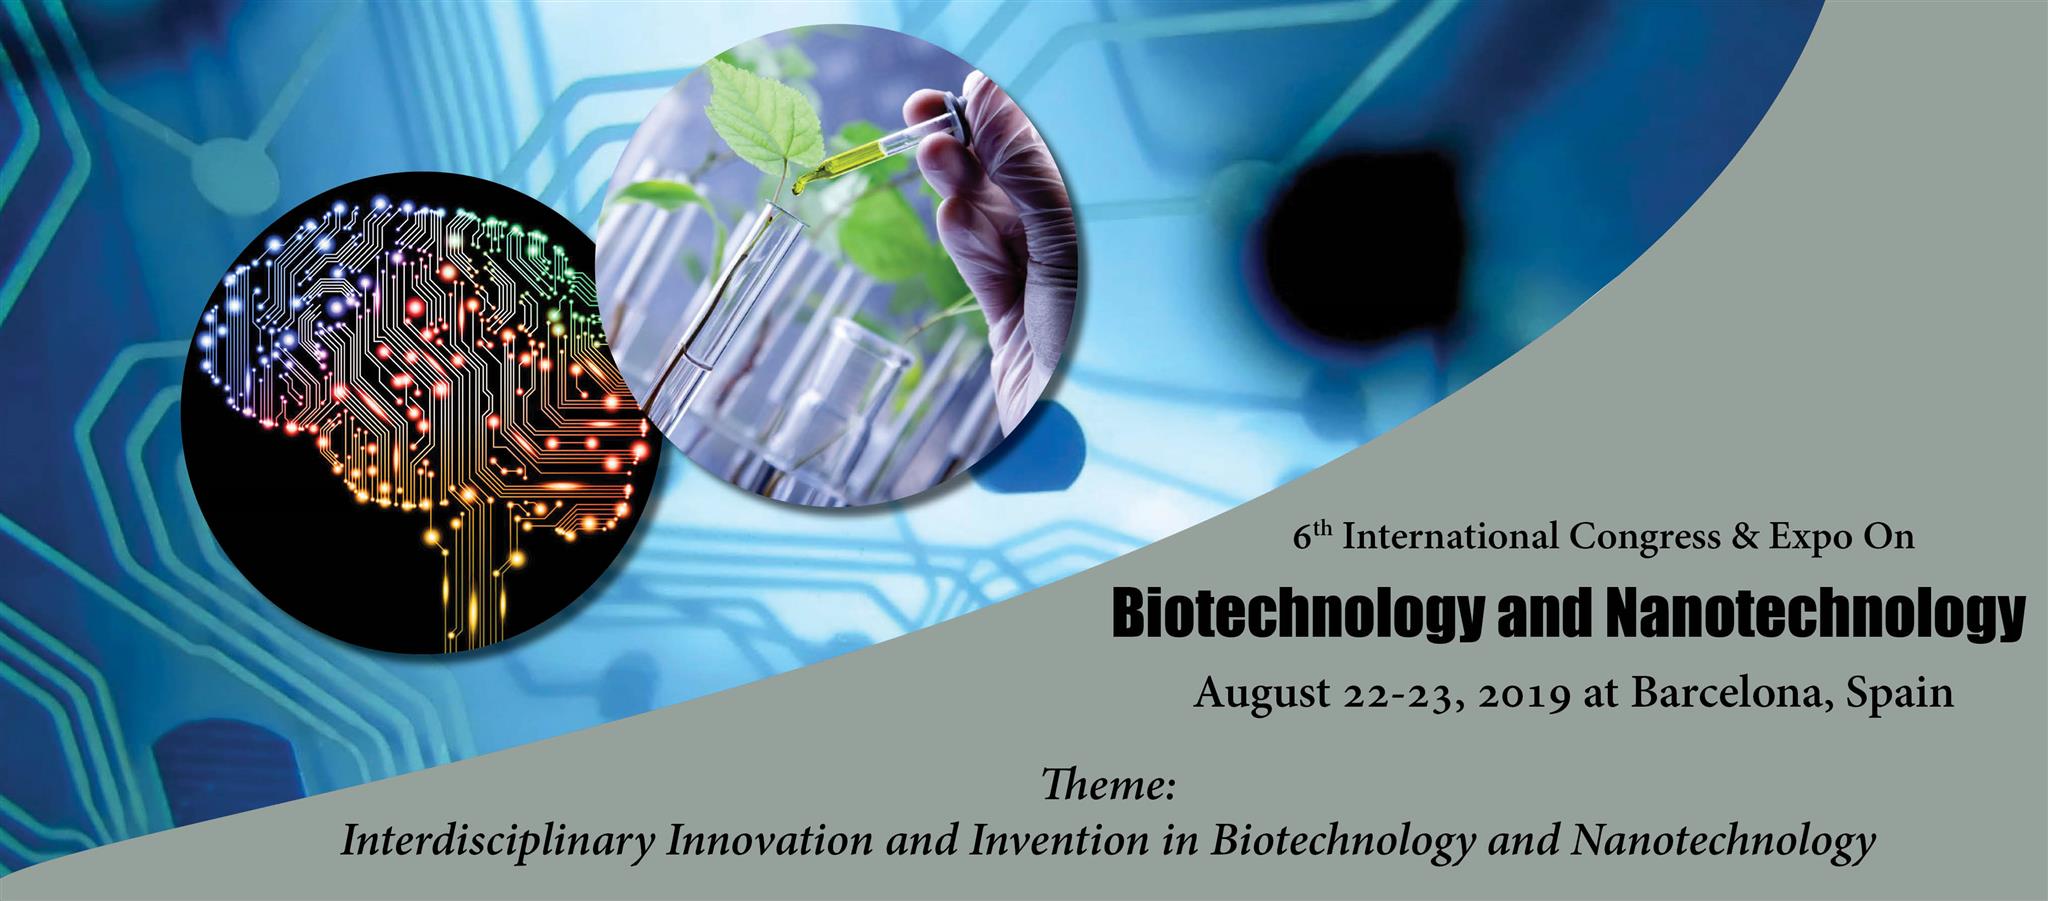 6th International Congress & Expo on Biotechnology and Nanotechnology, Barcelona, Cataluna, Spain